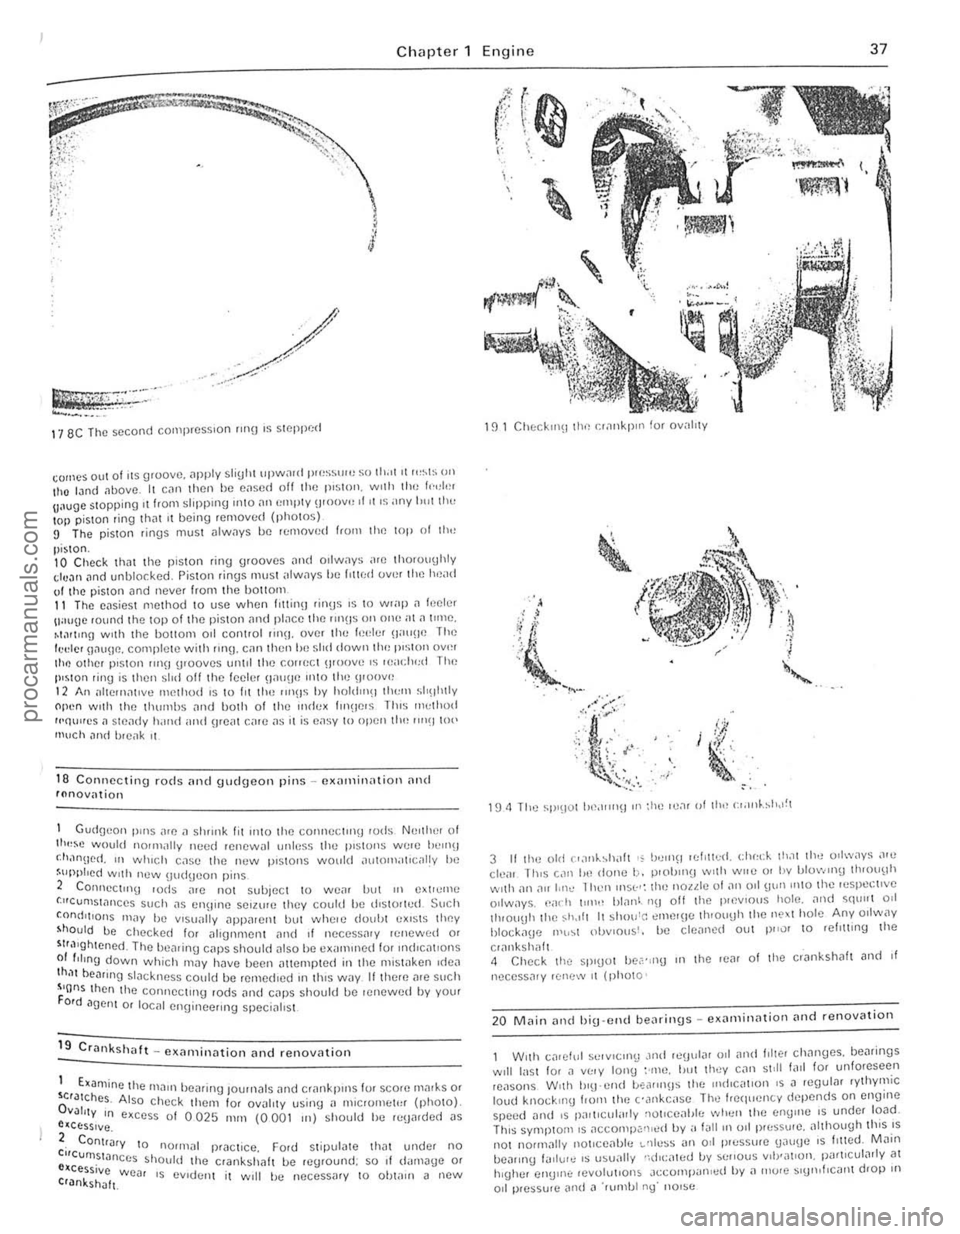 FORD CAPRI 1974  Workshop Manual , 
:: 
" , 
.~. 
, . 
J 
I 
I li . ,, : 
) 
) 
Chapter 1 Engine 37 
------------------~~----------------~ 
17 8e Tho socond compress,on " 11\1 I~ steppr:d 
, ., 
4 
cOI"es out 01 I1S groOvO.  ;;Ipp